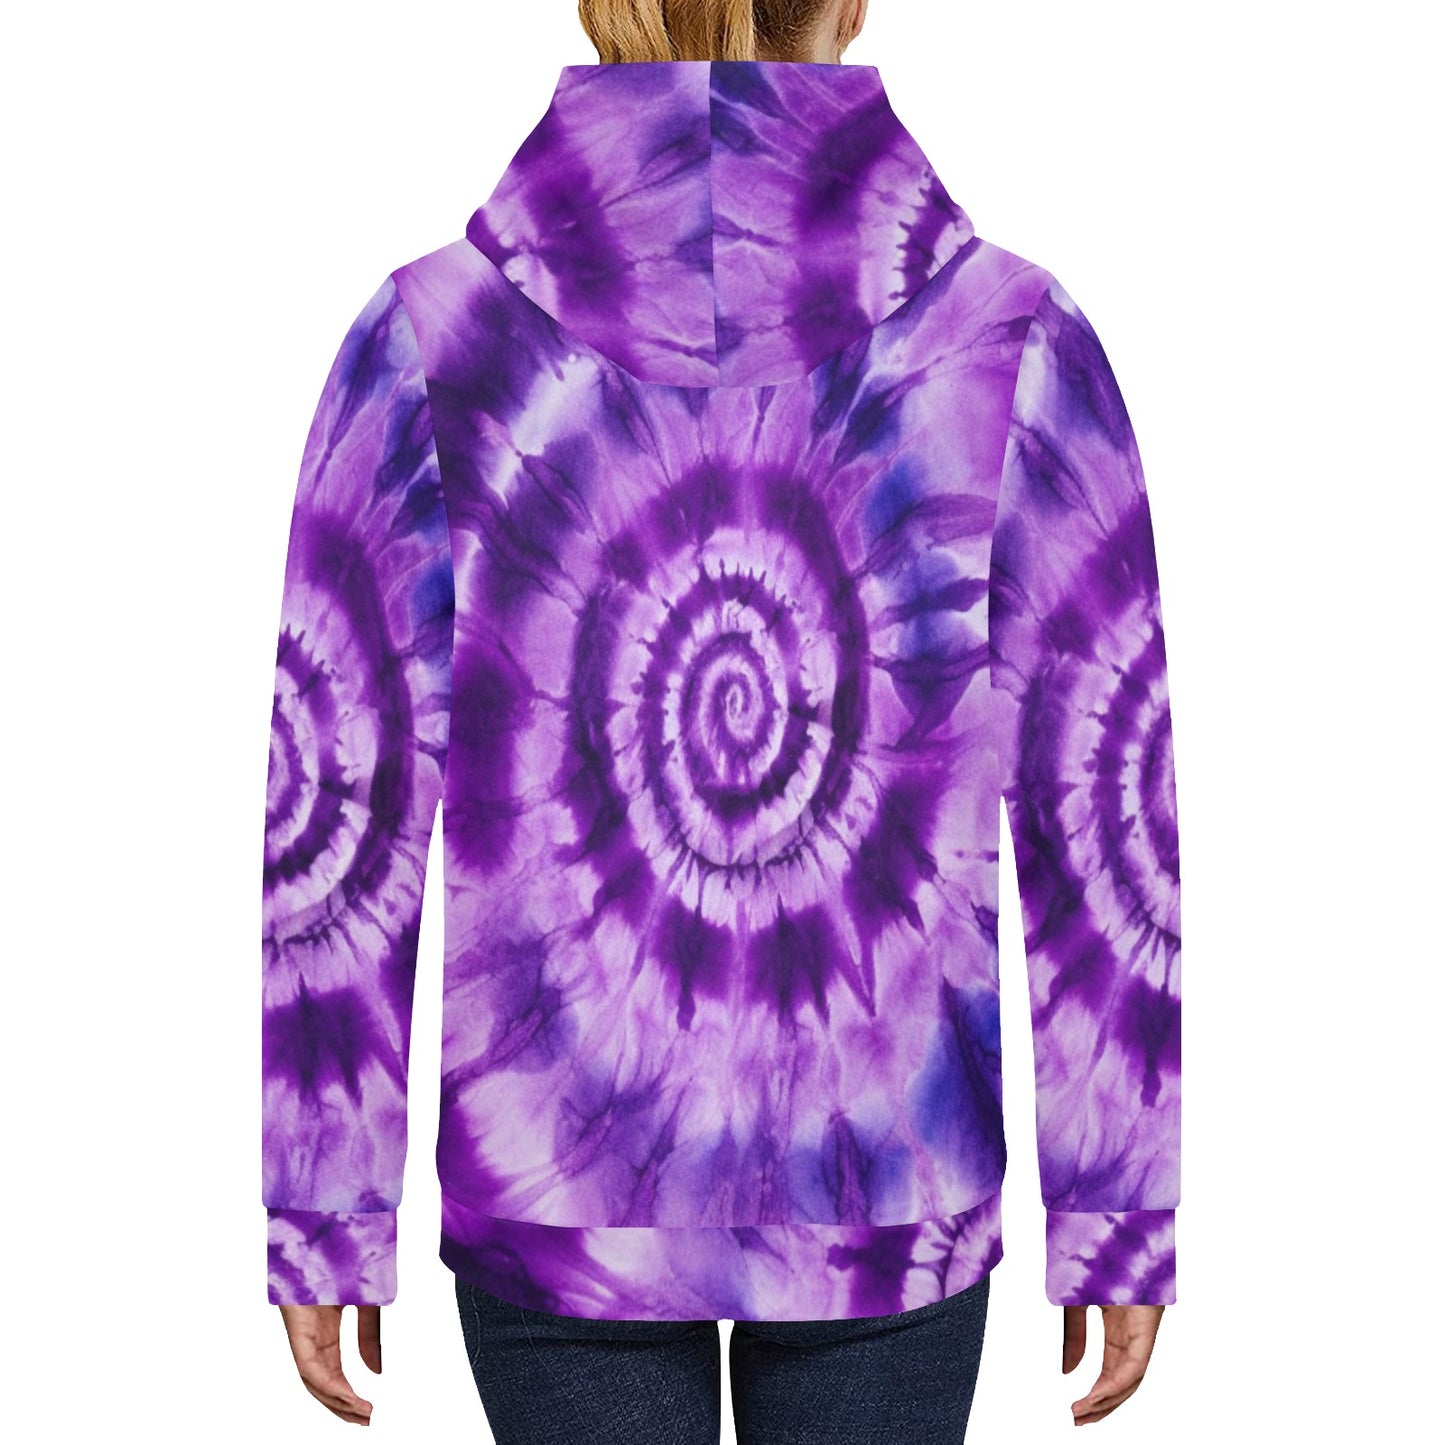 Purple Tie Dye Women Pullover Fleece Hoodie, Aesthetic Graphic Hooded Long Sleeve Sweatshirt with Pockets